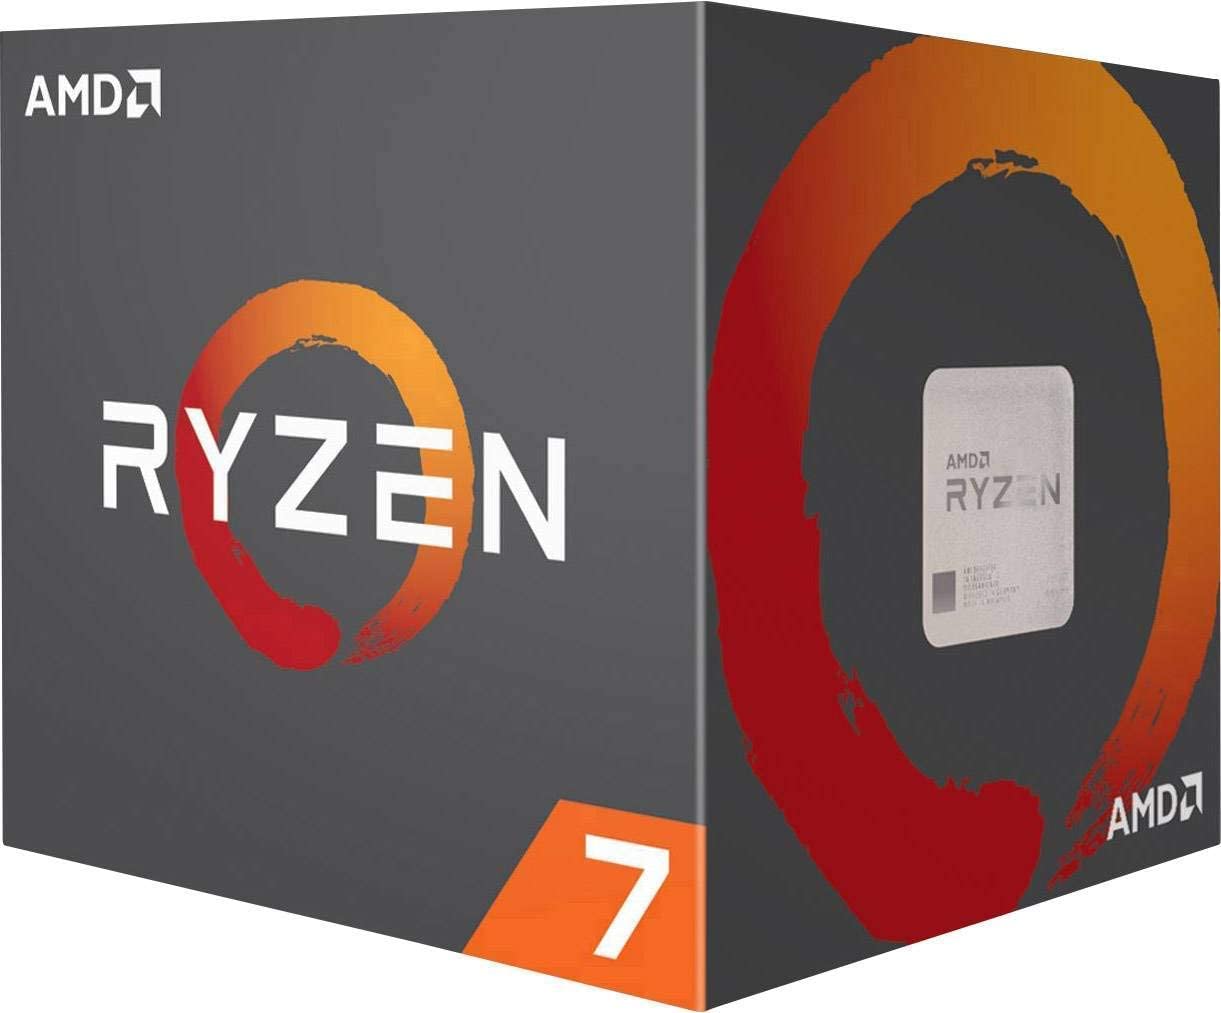 AMD Ryzen 7 3800X CPU with Wraith Prism cooler (7NM, 8/16 Cores/Threads, 3.9GHz Base, 4.5GHz Boost, Socket AM4, 105W TDP Desktop Processor), Model 100-100000025BOX